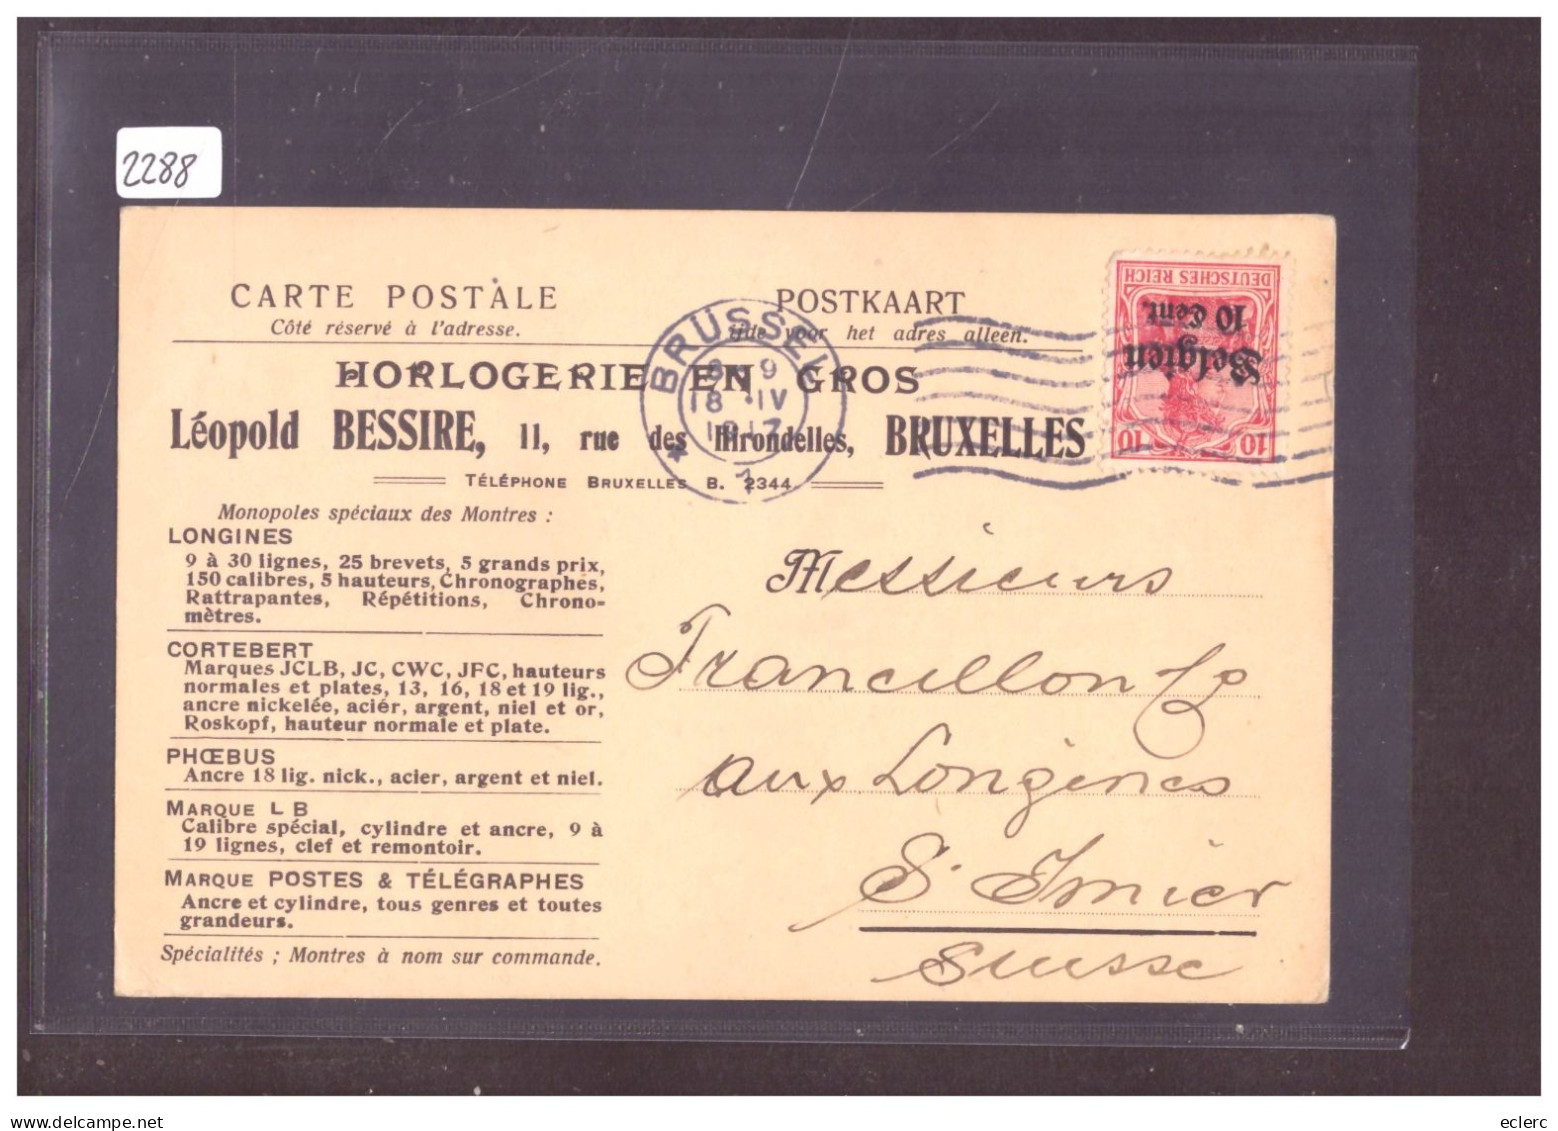 BELGIQUE ALLEMANDE - CARTE HORLOGERIE LEOPOLD BESSIRE, BRUXELLES  - ( WARNING: NO PAYPAL ) - OC38/54 Occupazione Belga In Germania